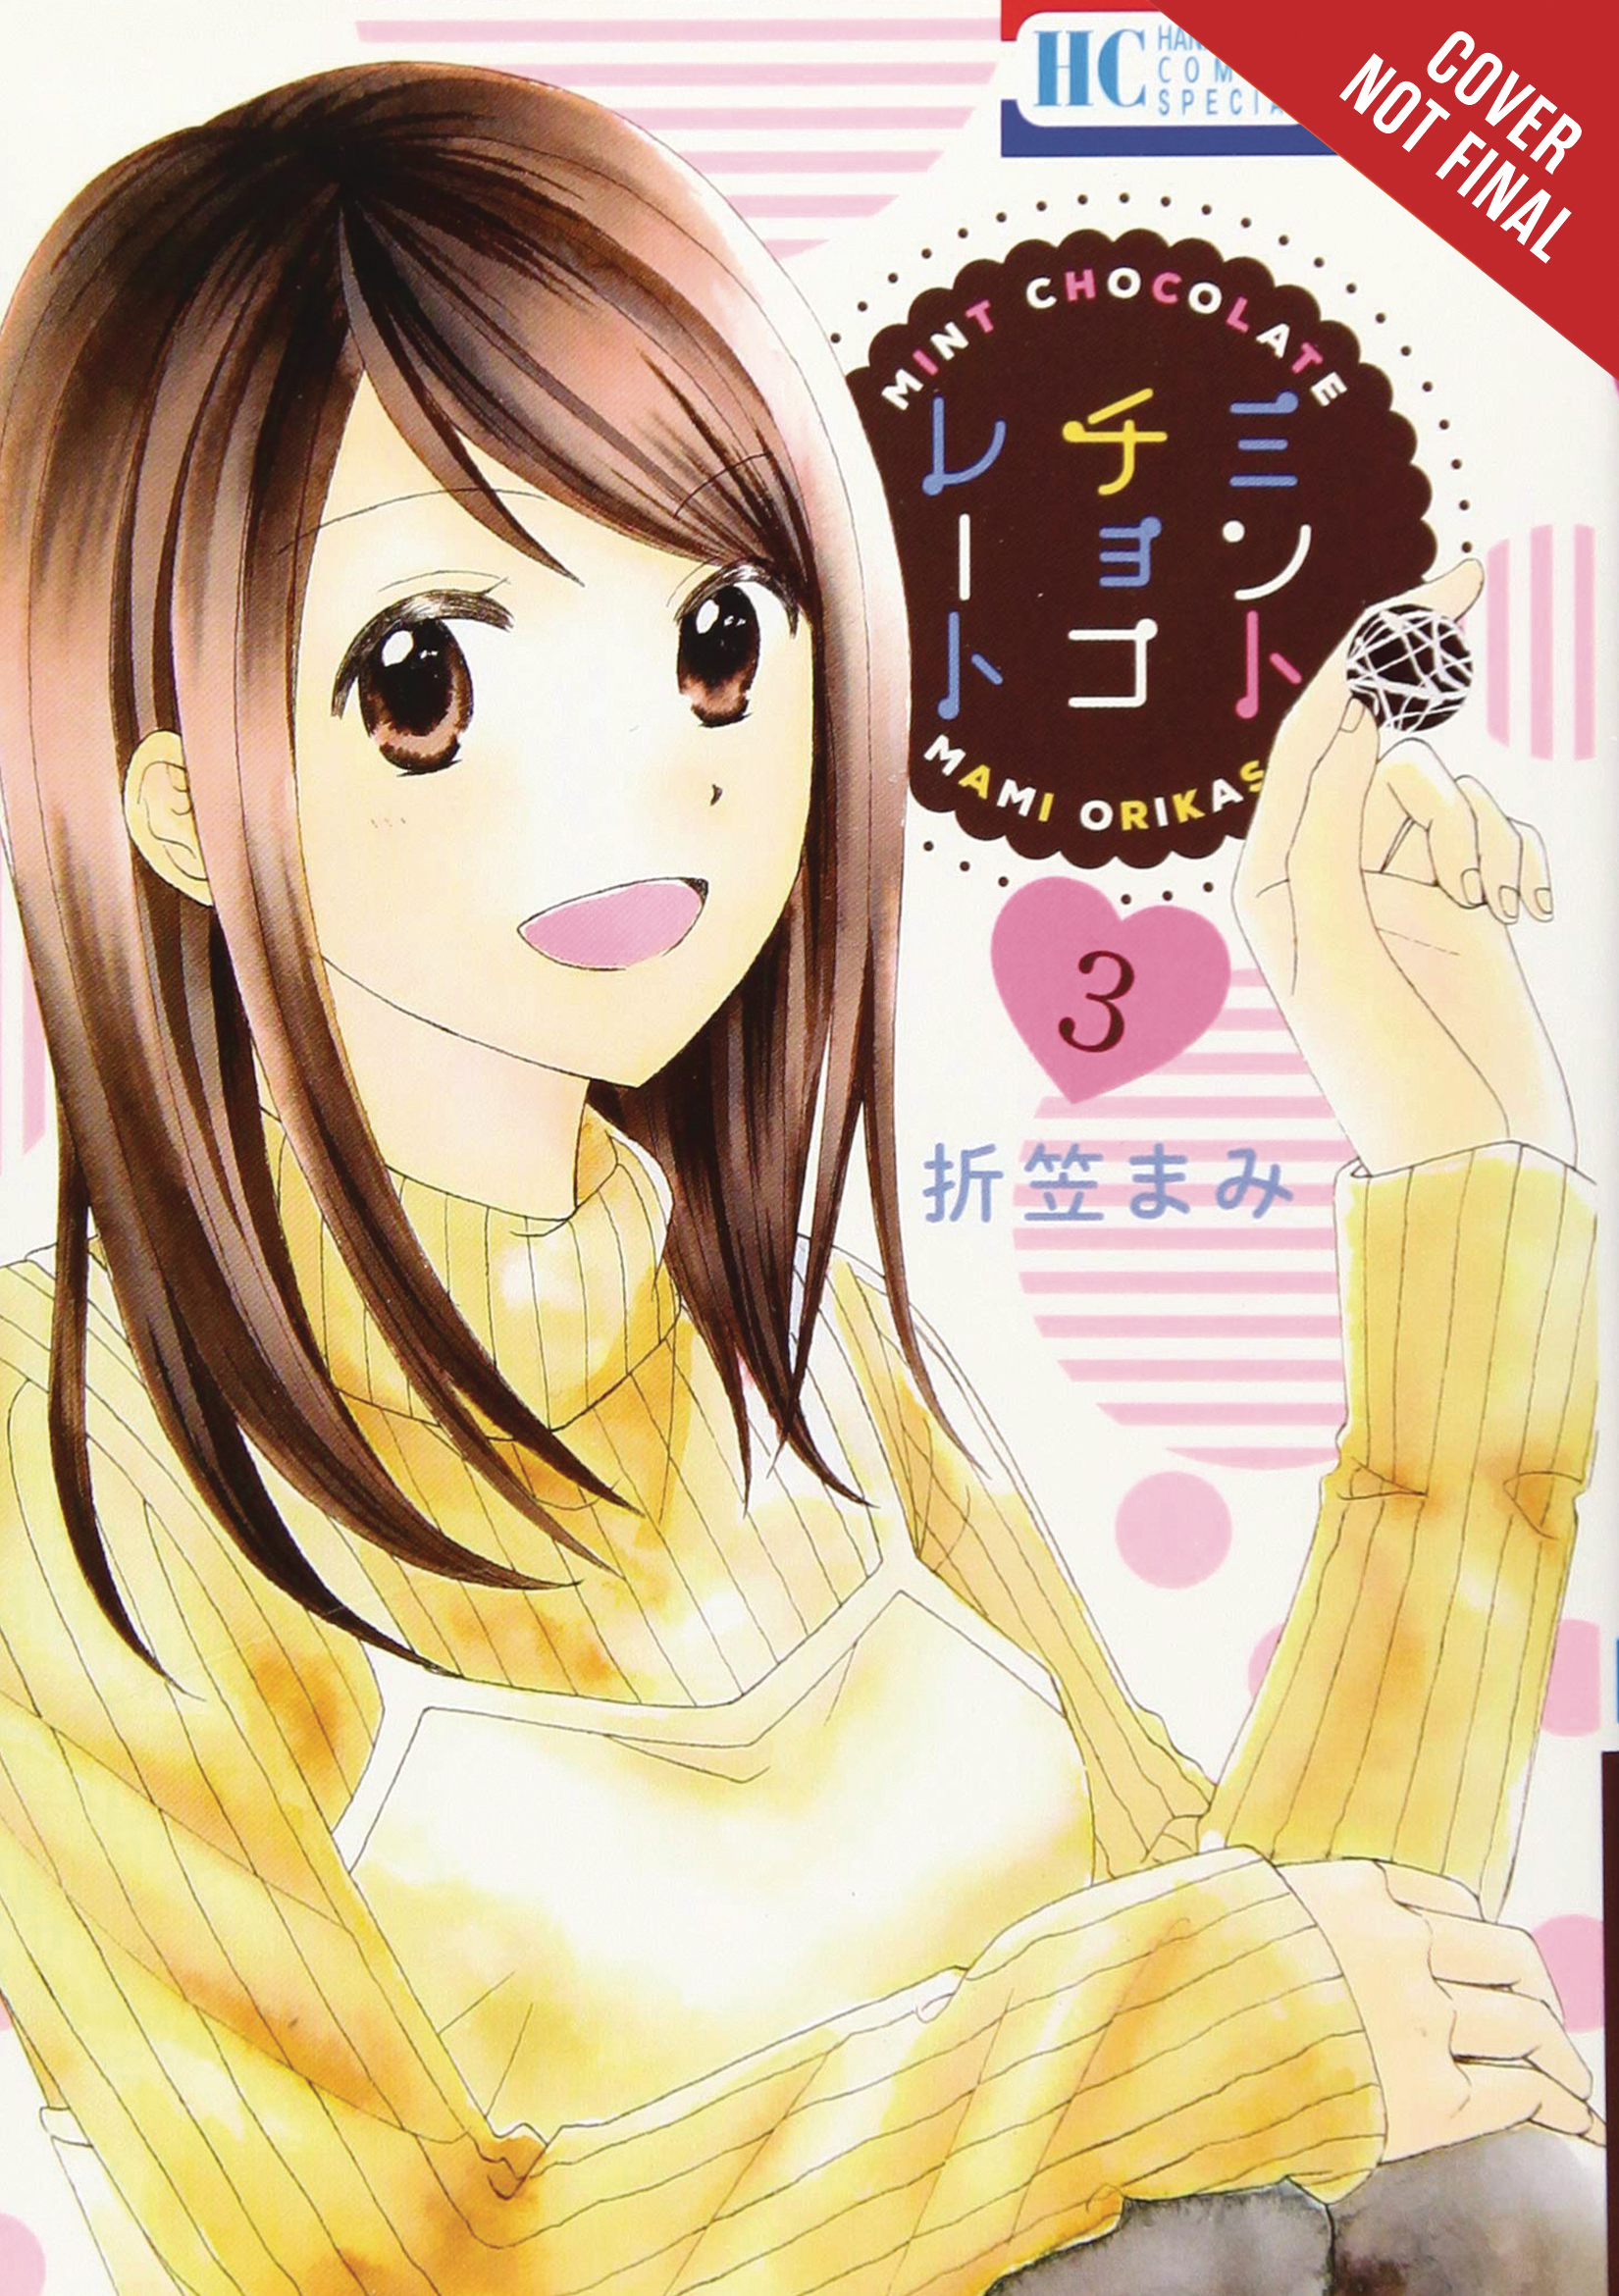 Mint Chocolate Manga Volume 3